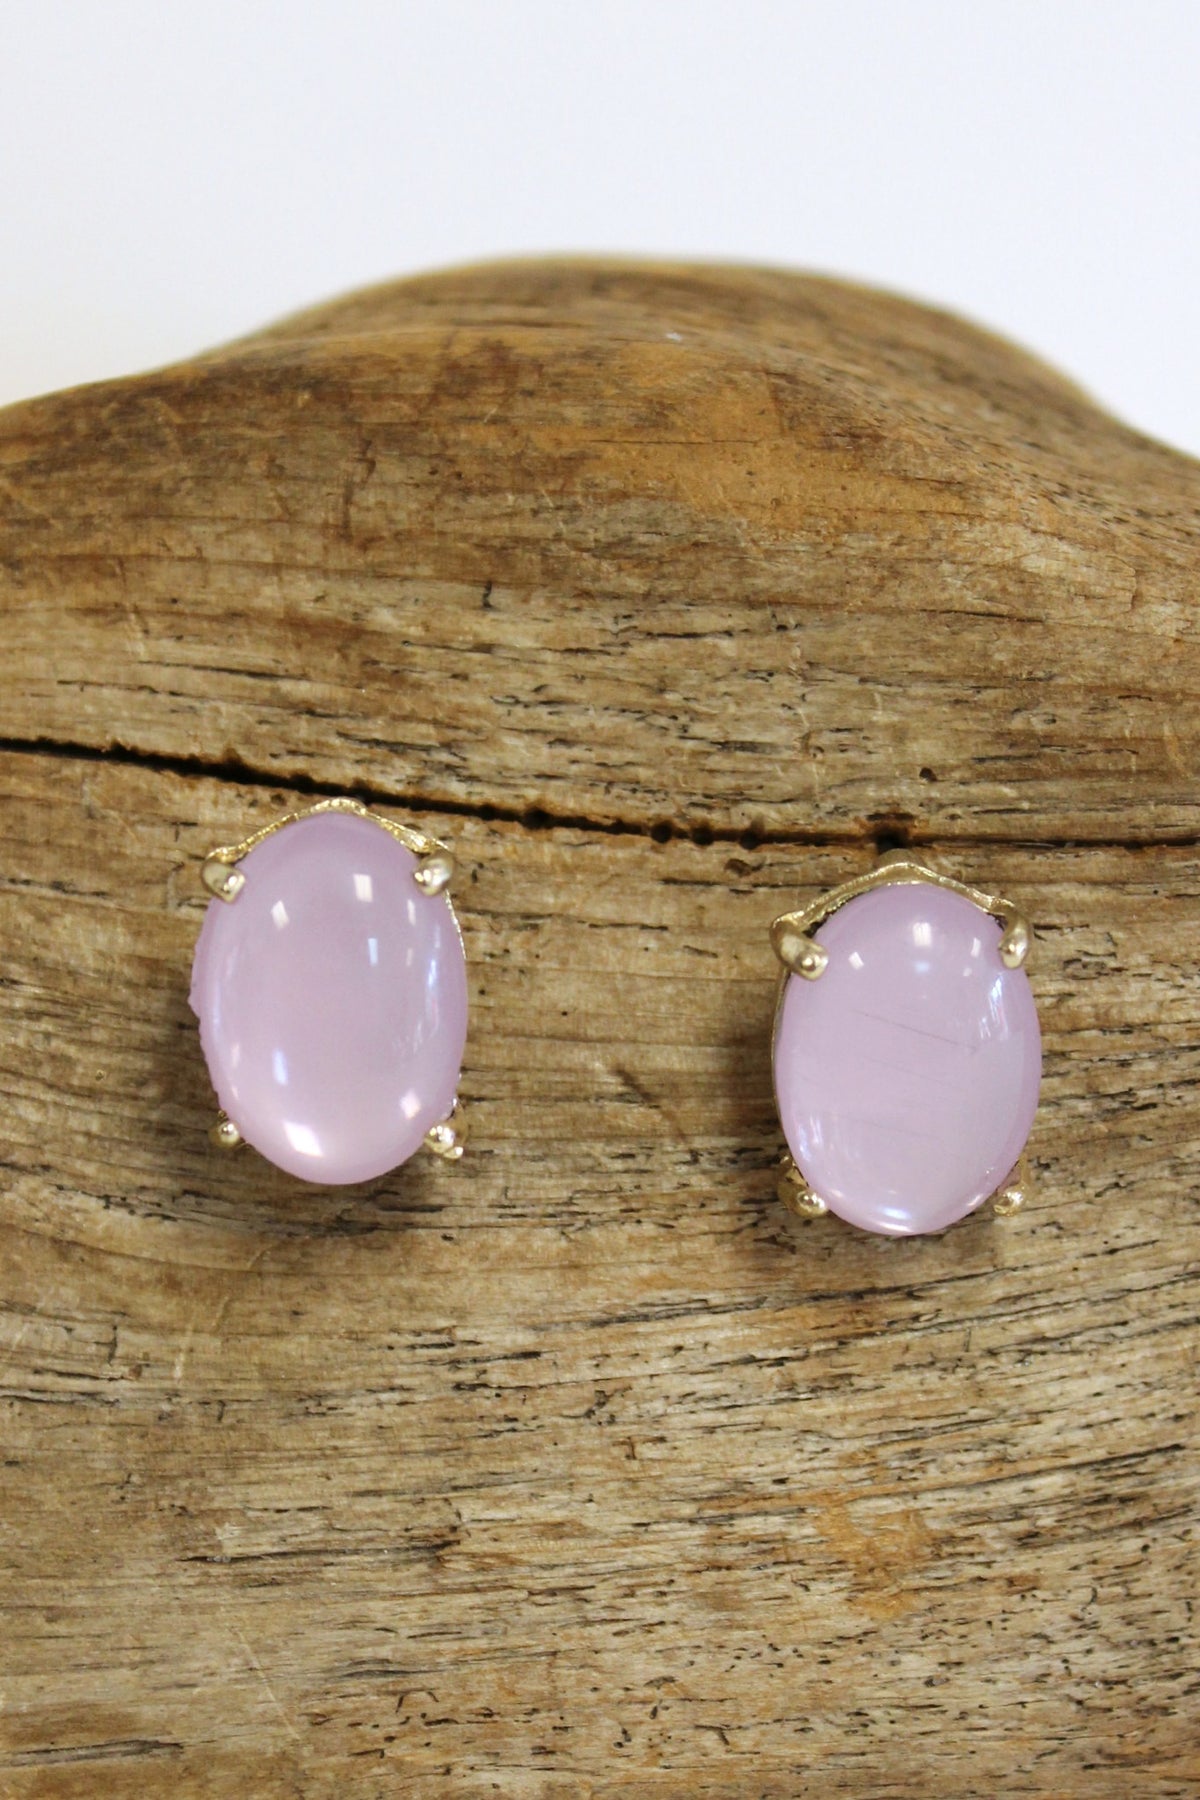 Translucent Oval Earrings, Lavender